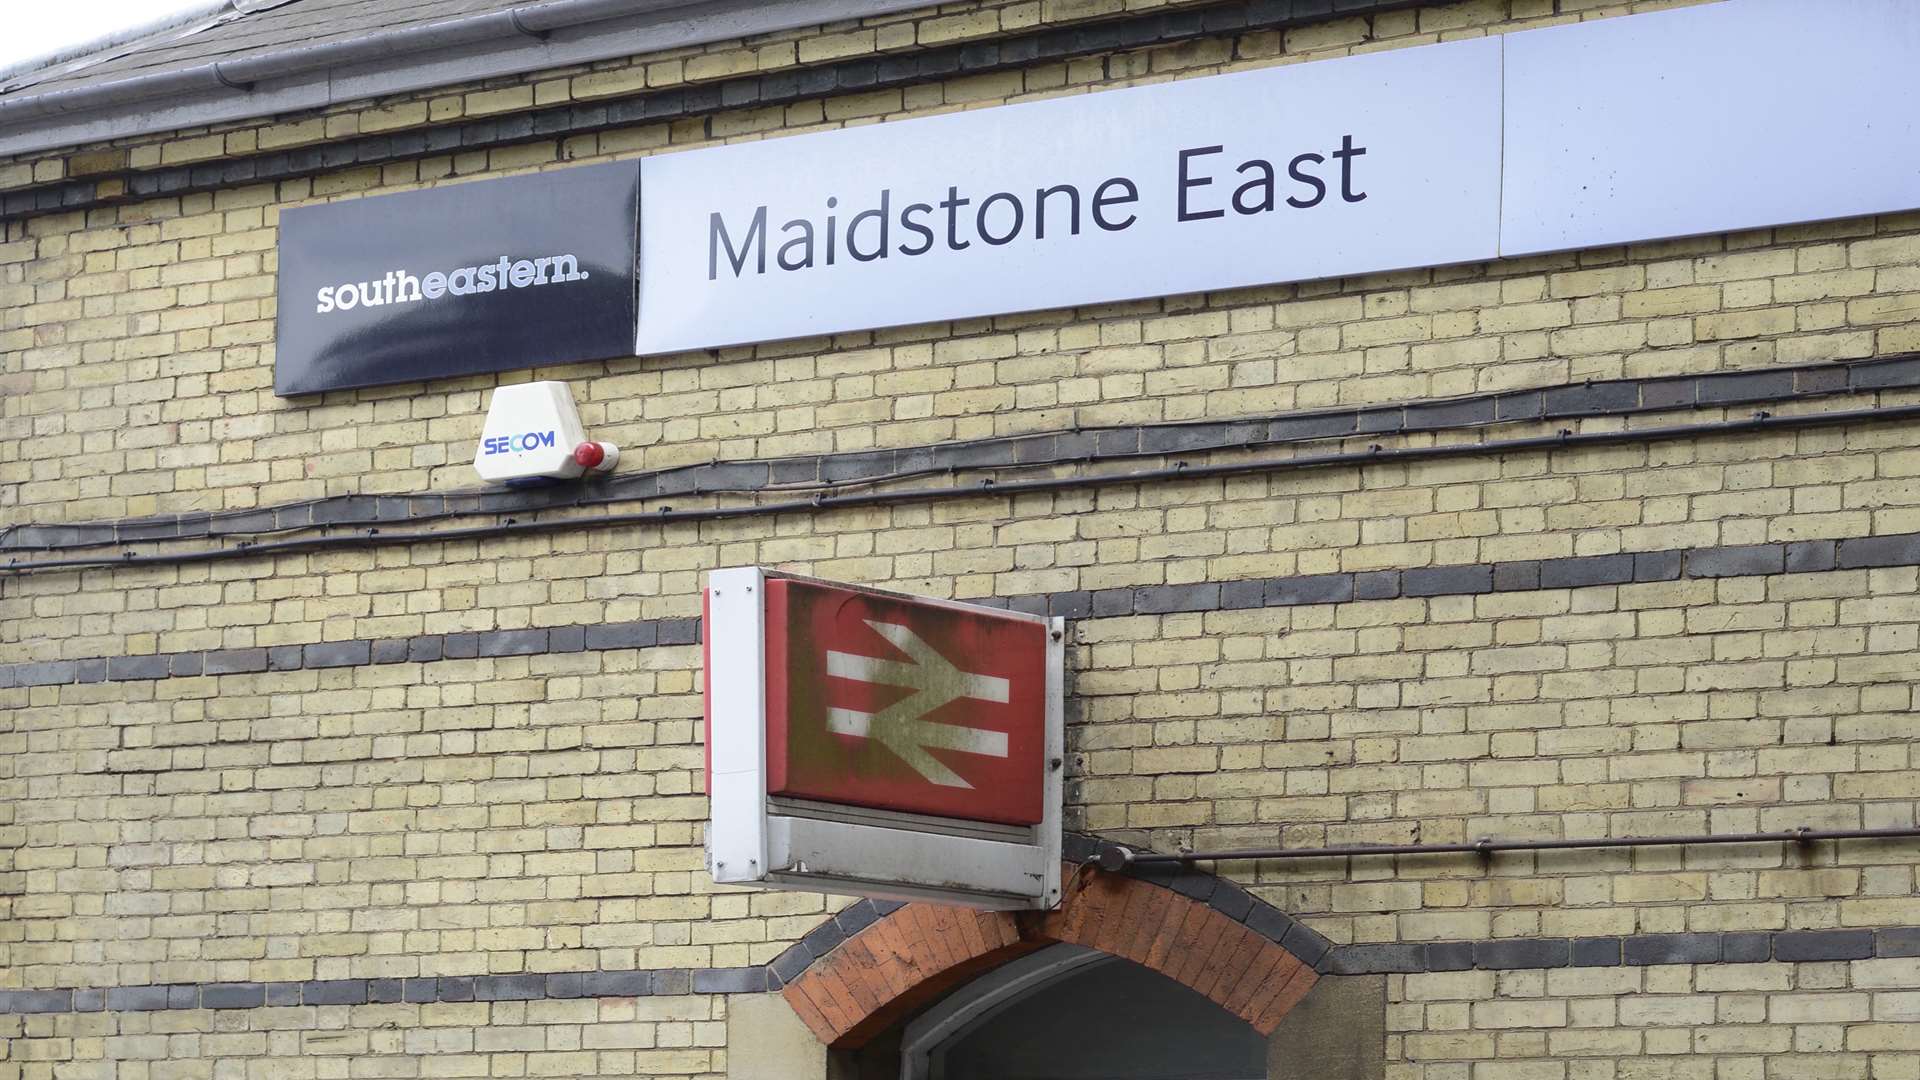 Maidstone East